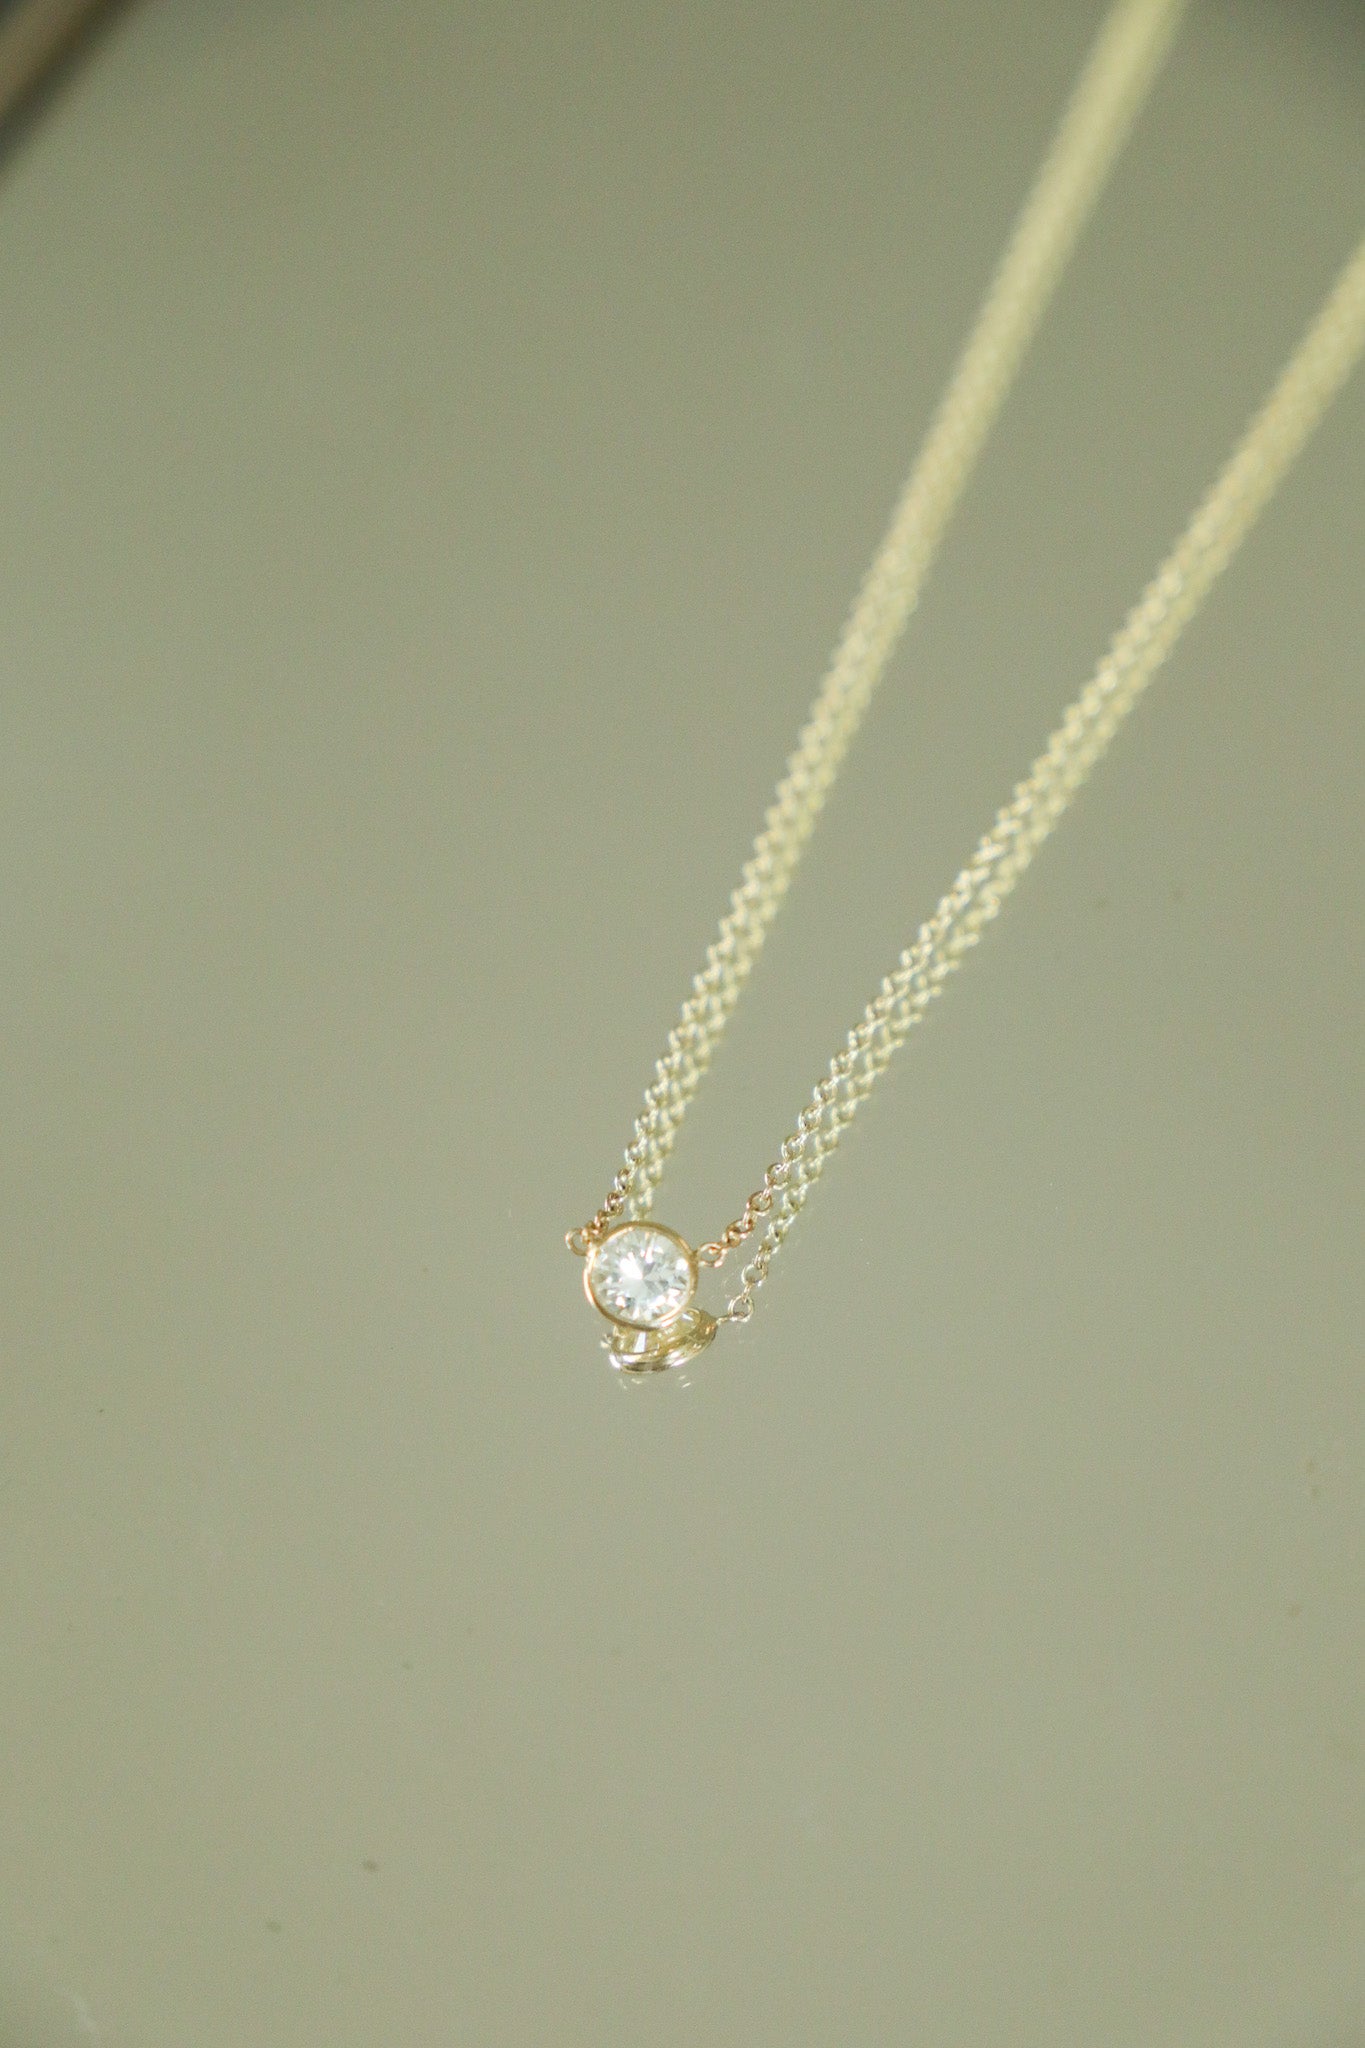 N045 - 14k YG 16-18" Necklace w/1 Bezel Set Round Diamond 0.50cts